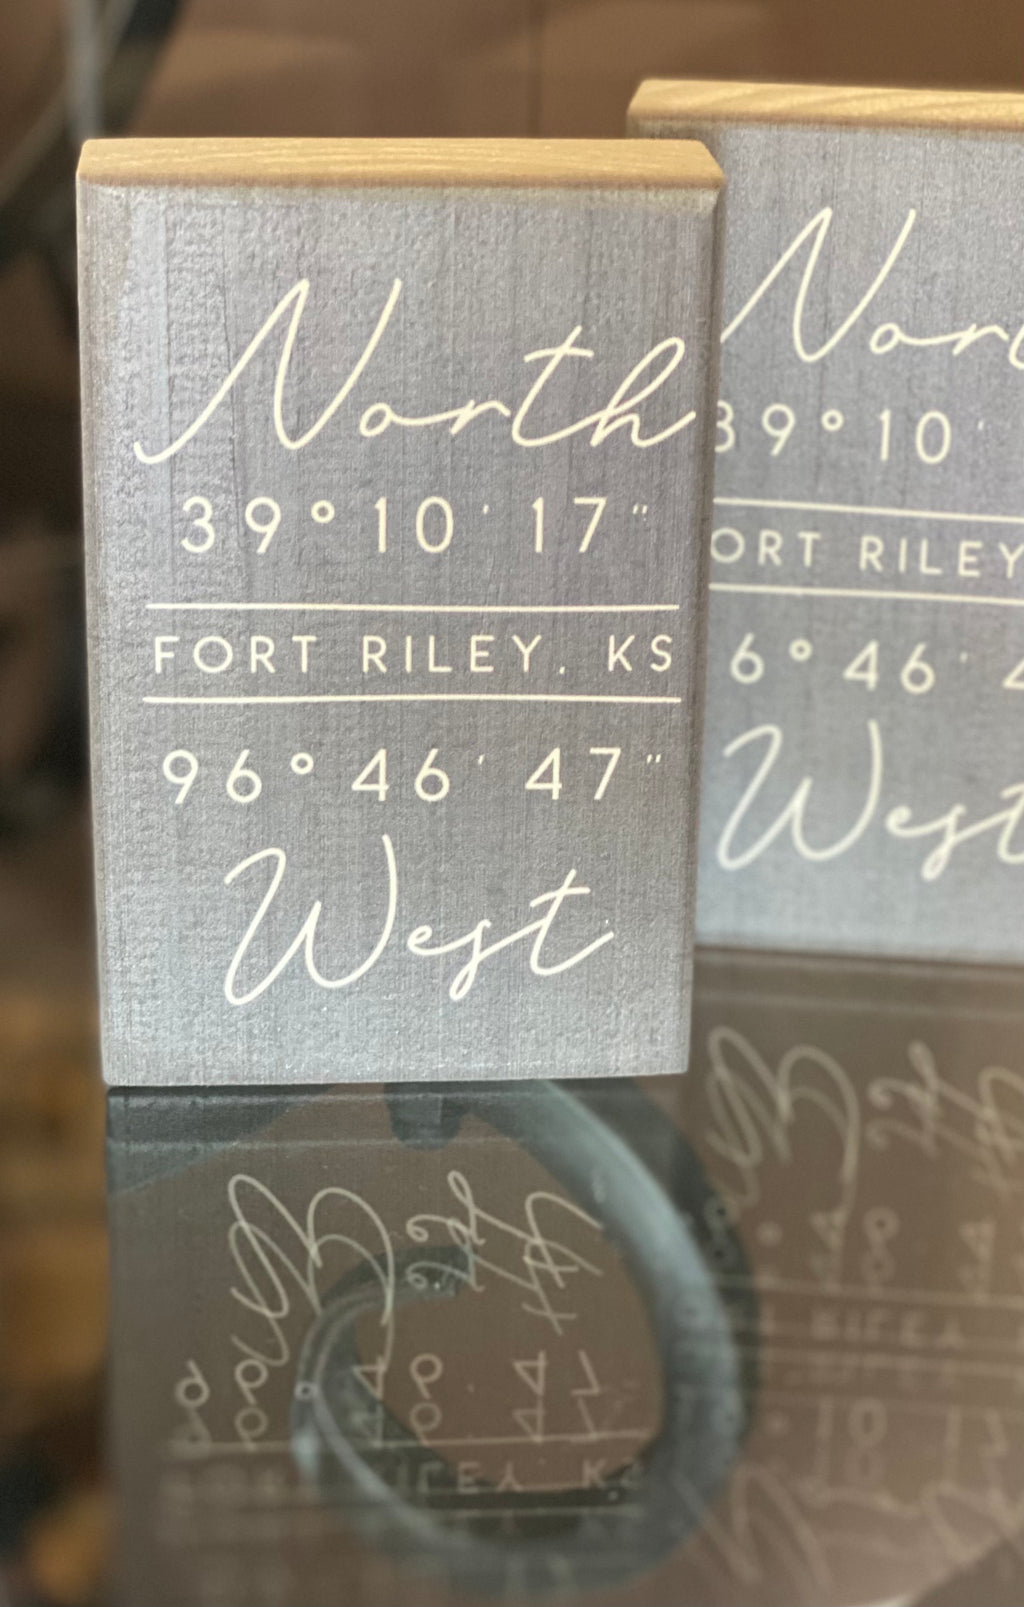 Fort Riley Vertical Cordinates